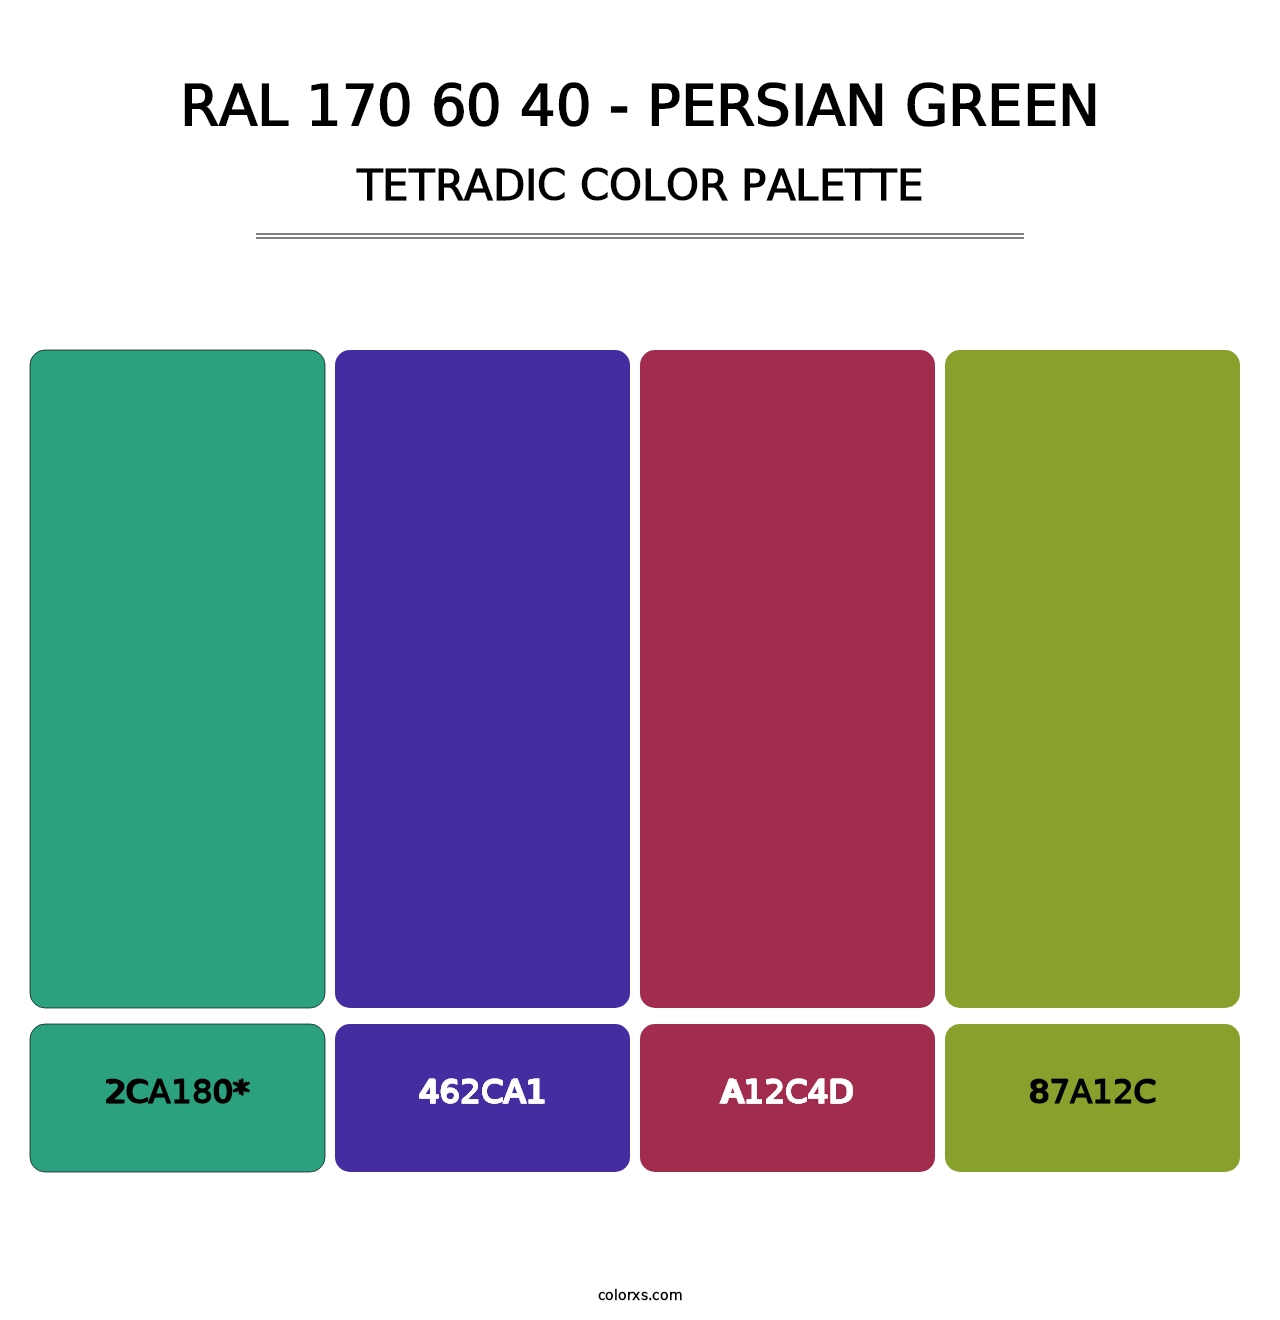 RAL 170 60 40 - Persian Green - Tetradic Color Palette